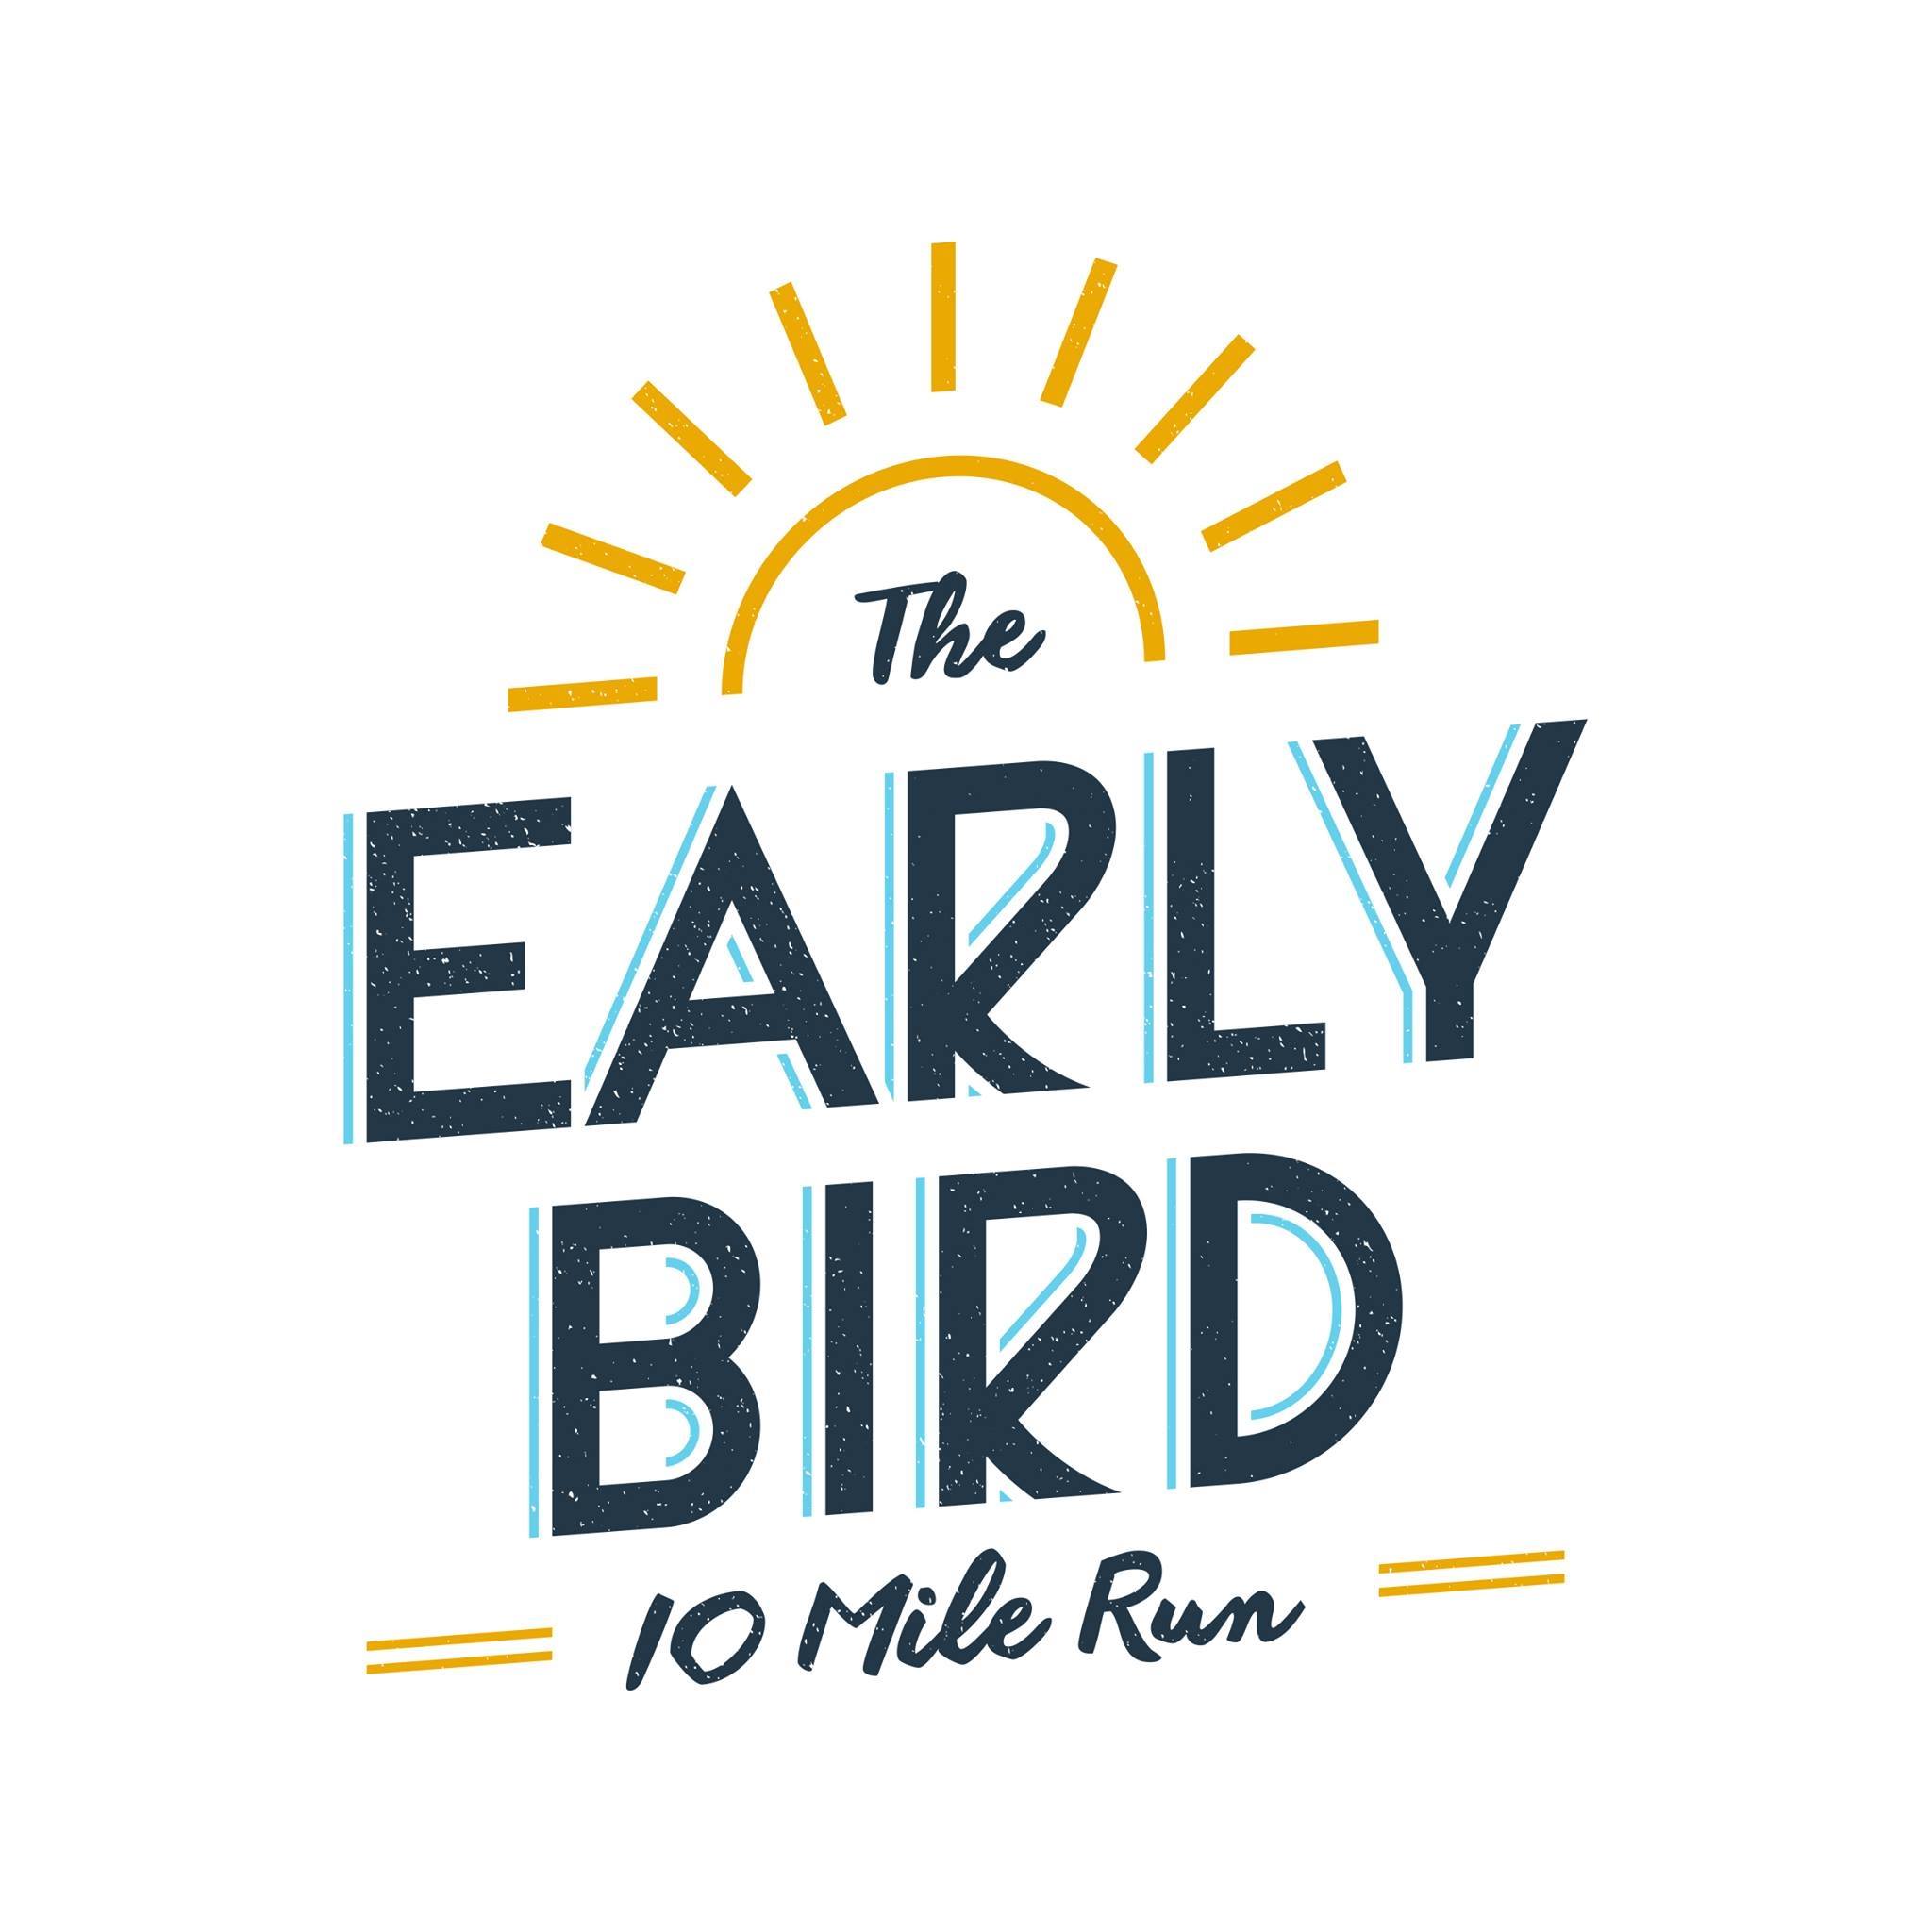 Early Bird 10 Mile Run logo on RaceRaves